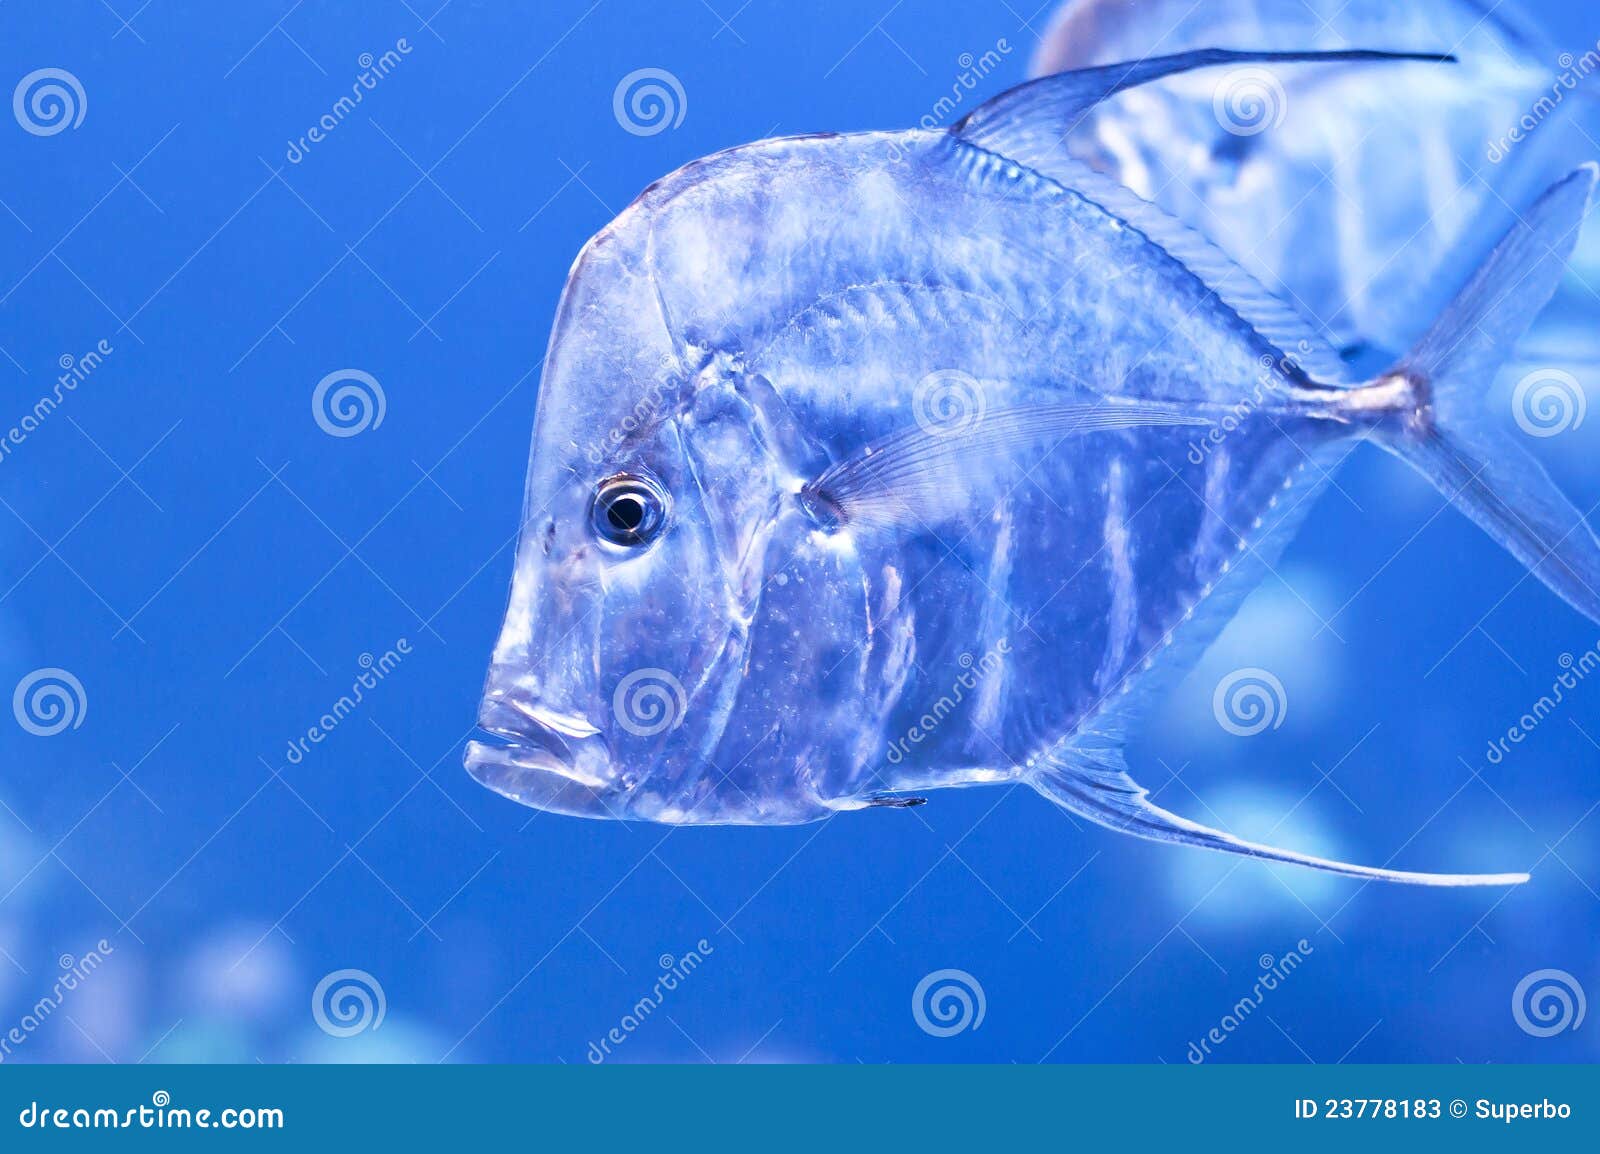 Indian Thread fish stock image. Image of background, animal - 23778183